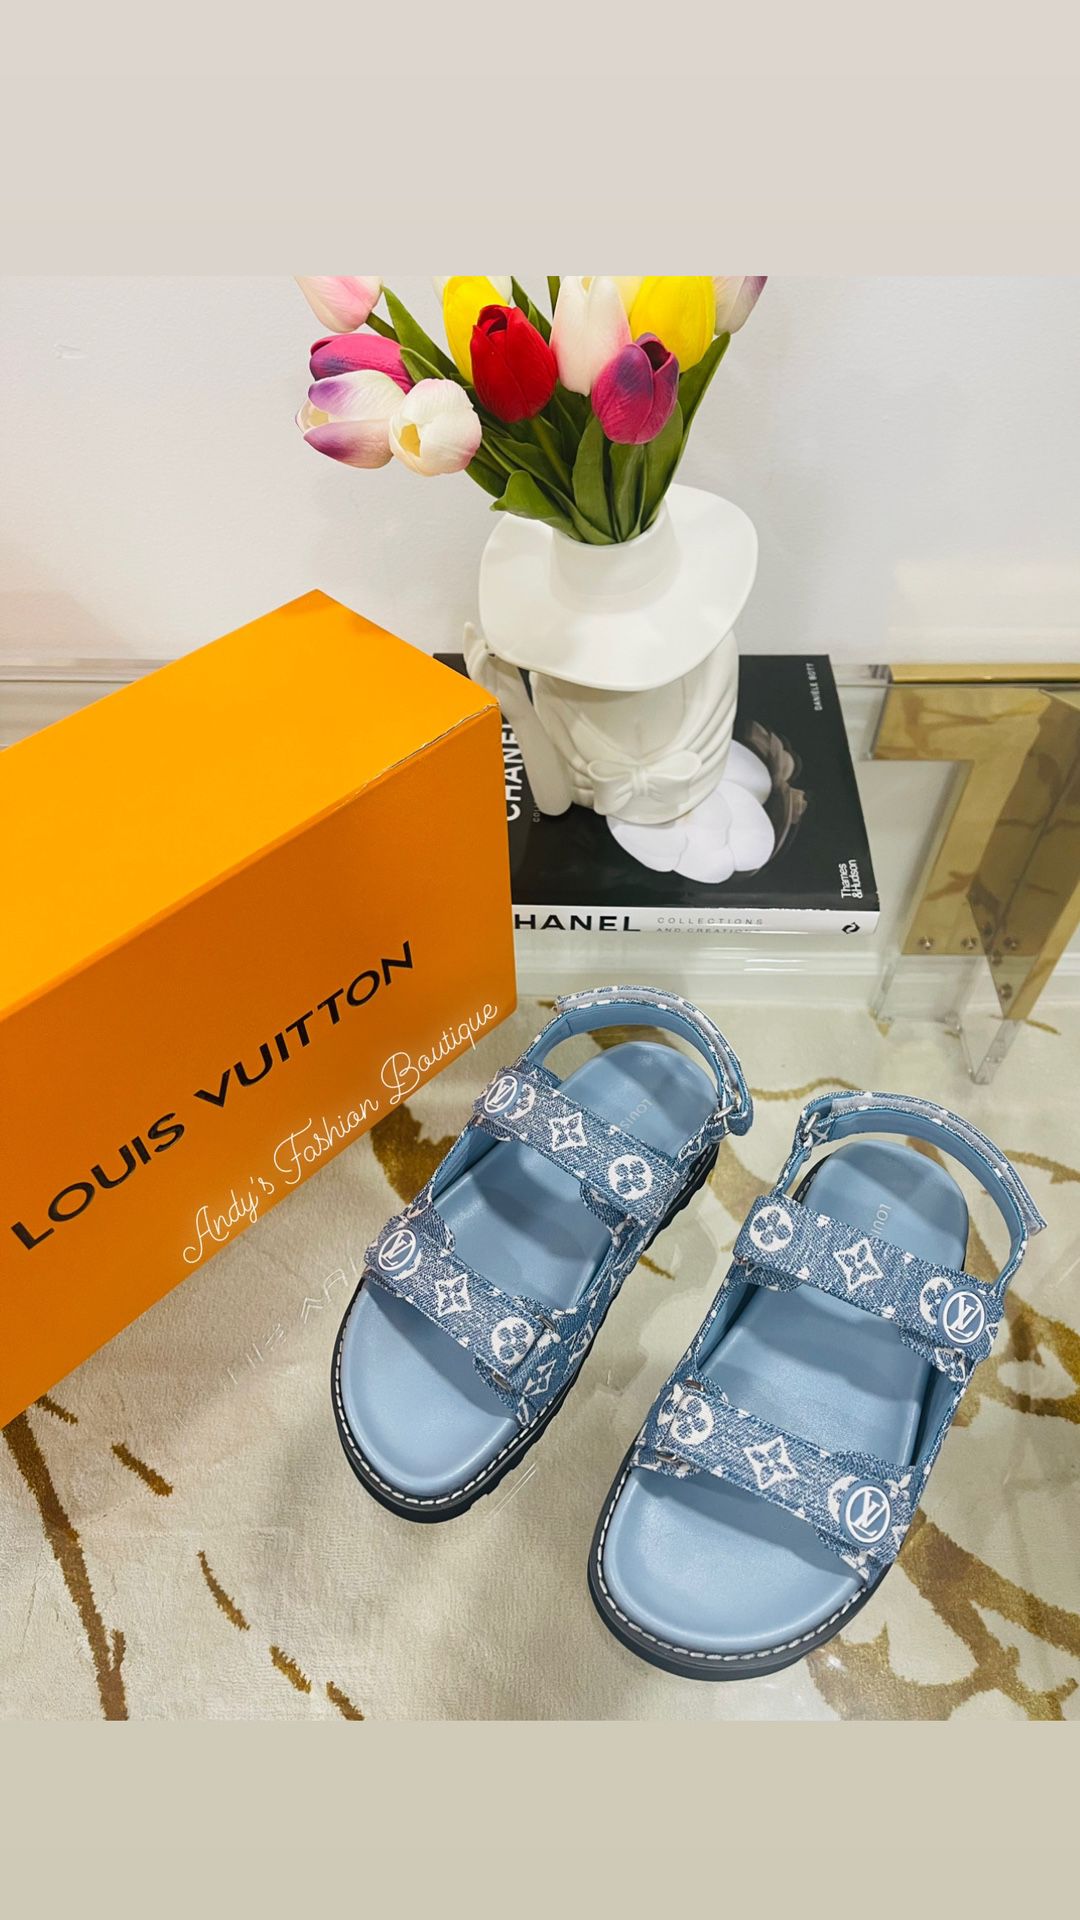 Louis Vuitton nomad sandals for Sale in Miami Gardens, FL - OfferUp